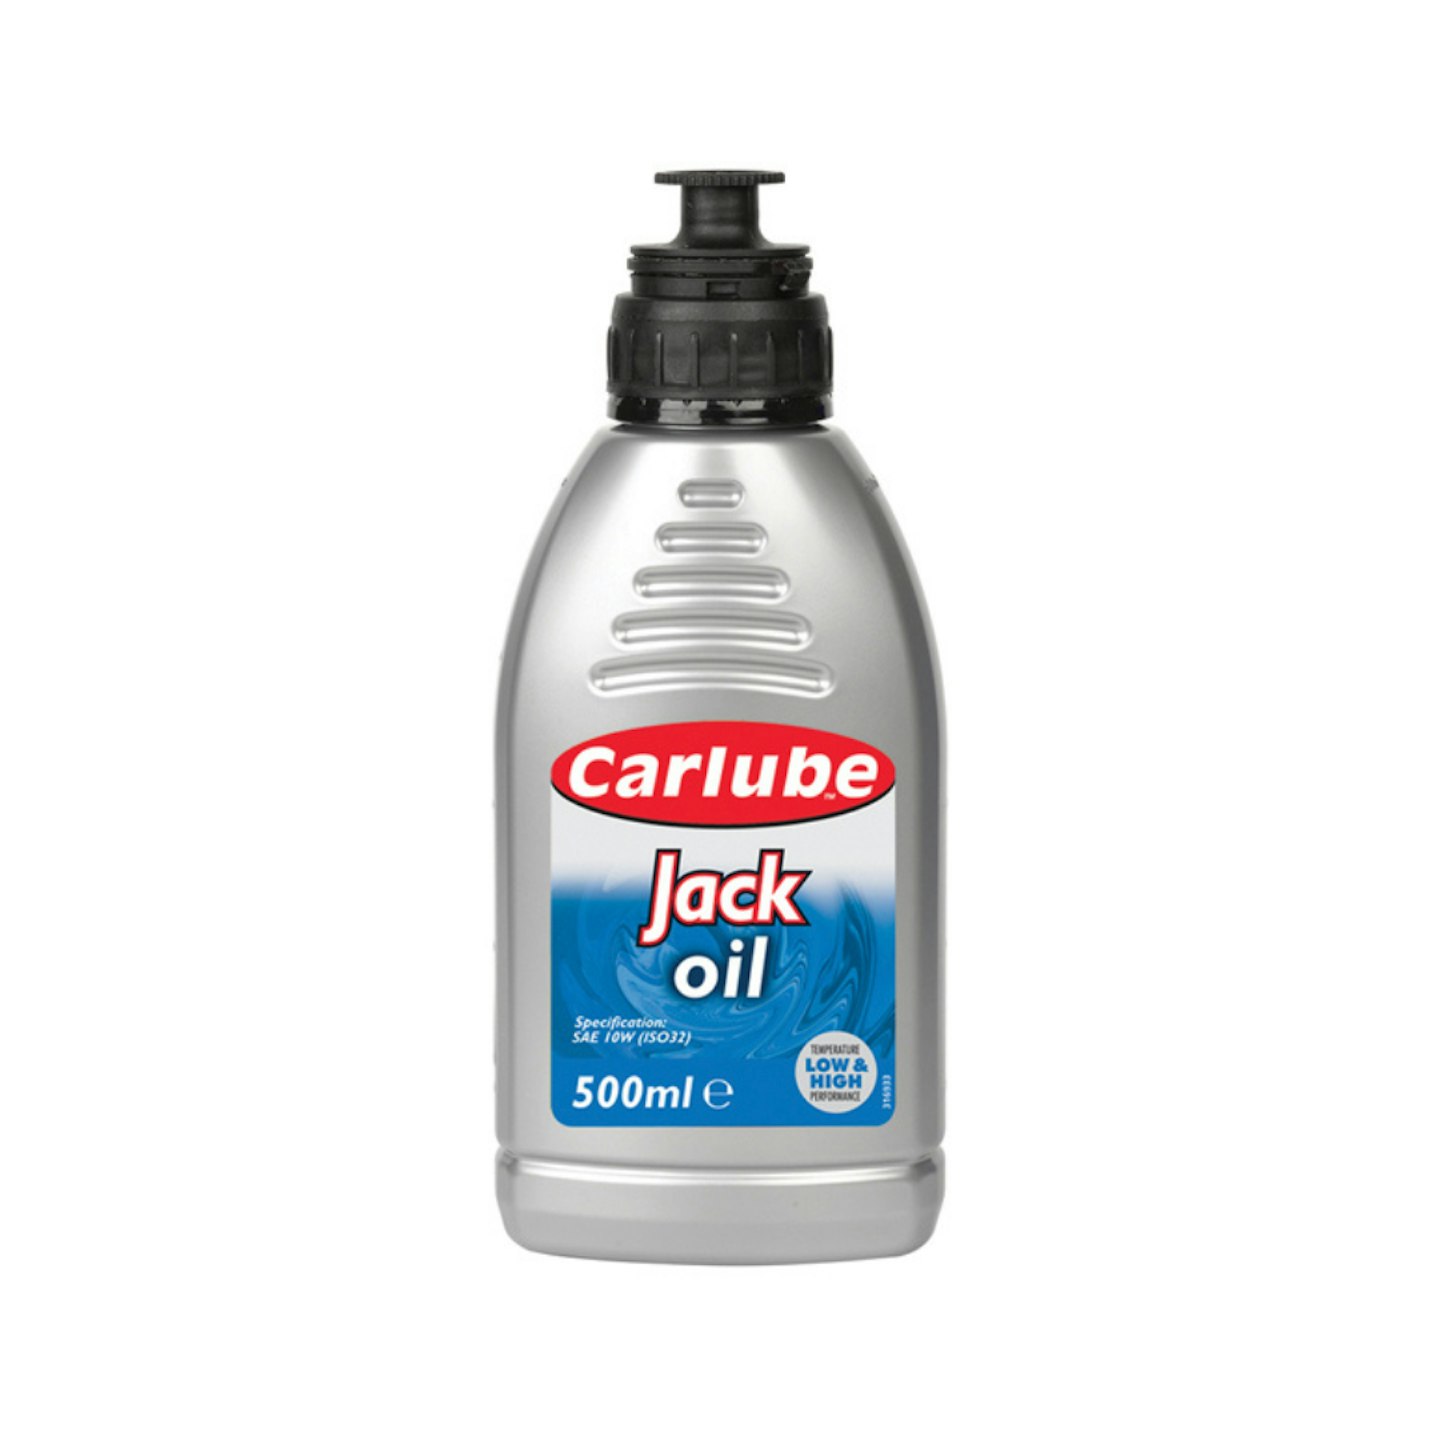 Carlube Jack Oil